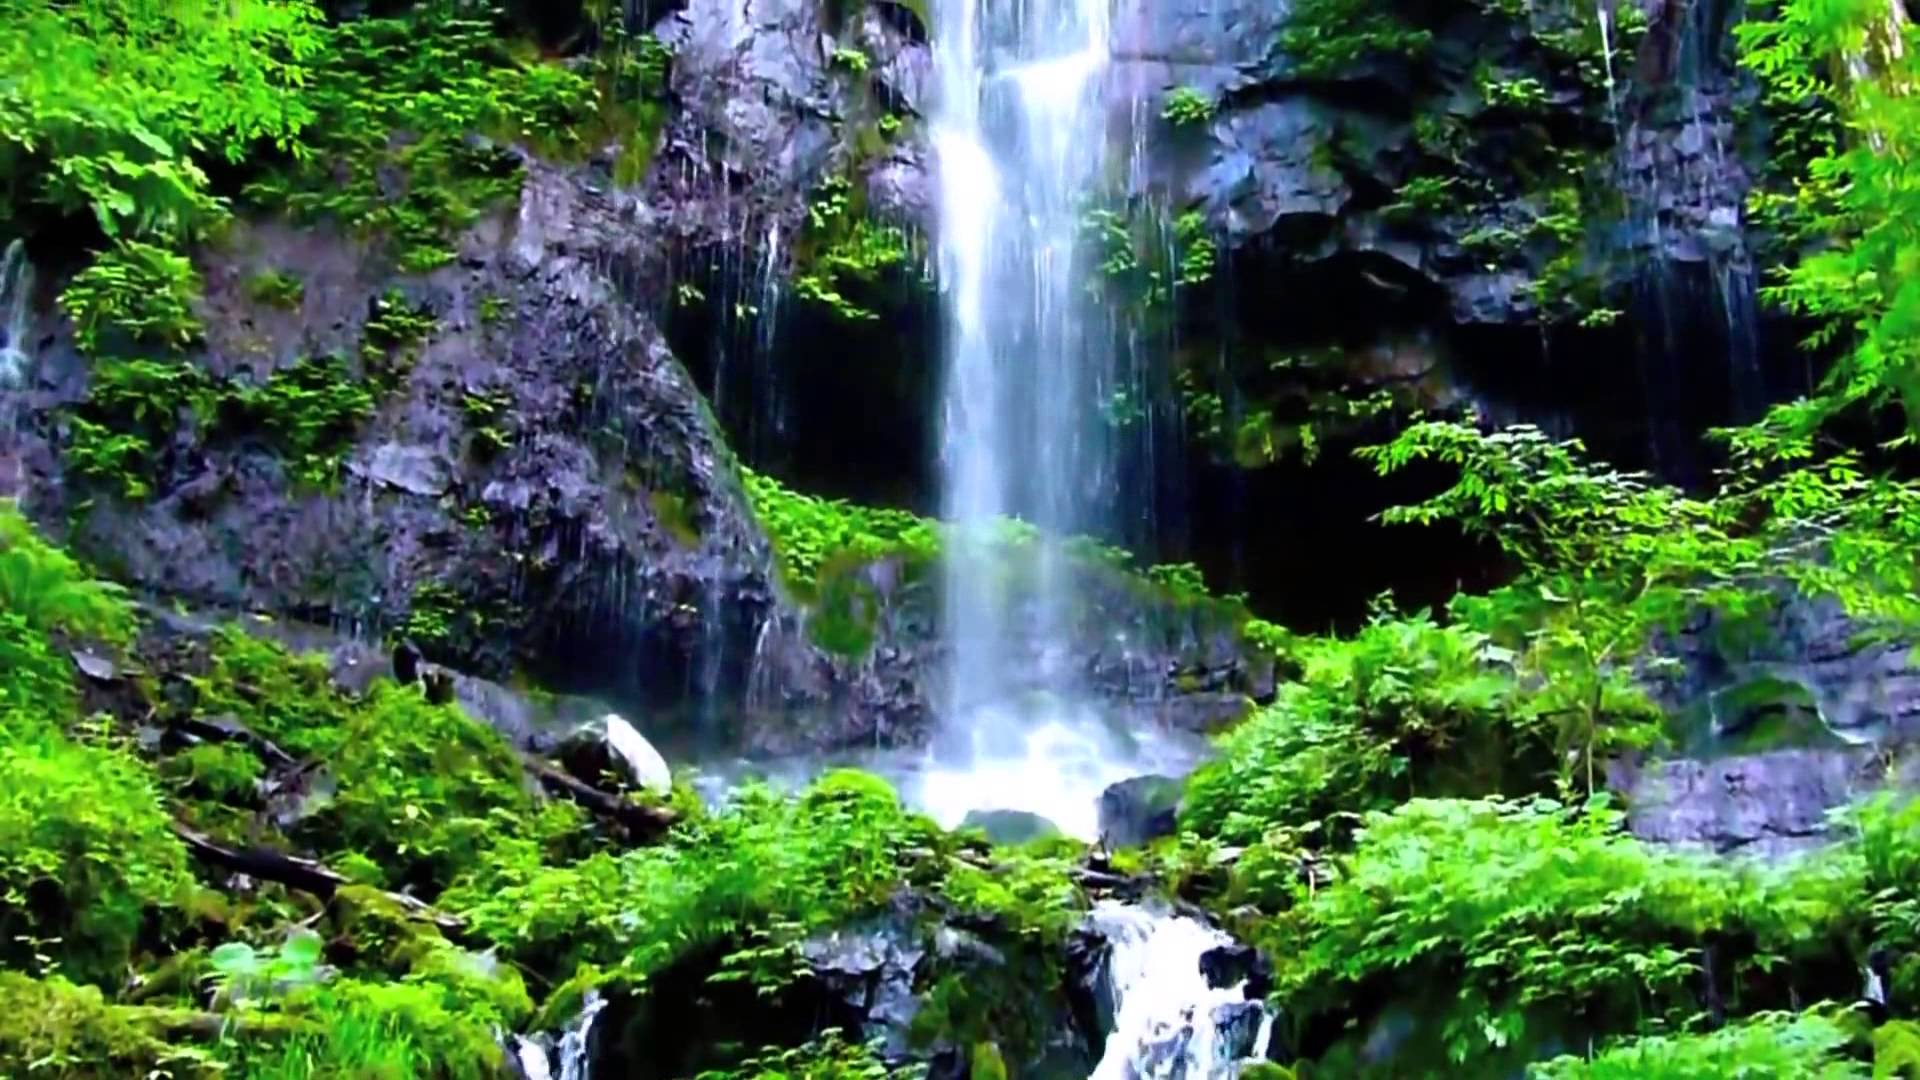 Mountain - Waterfall 7 - Video Background HD 1080p - YouTube